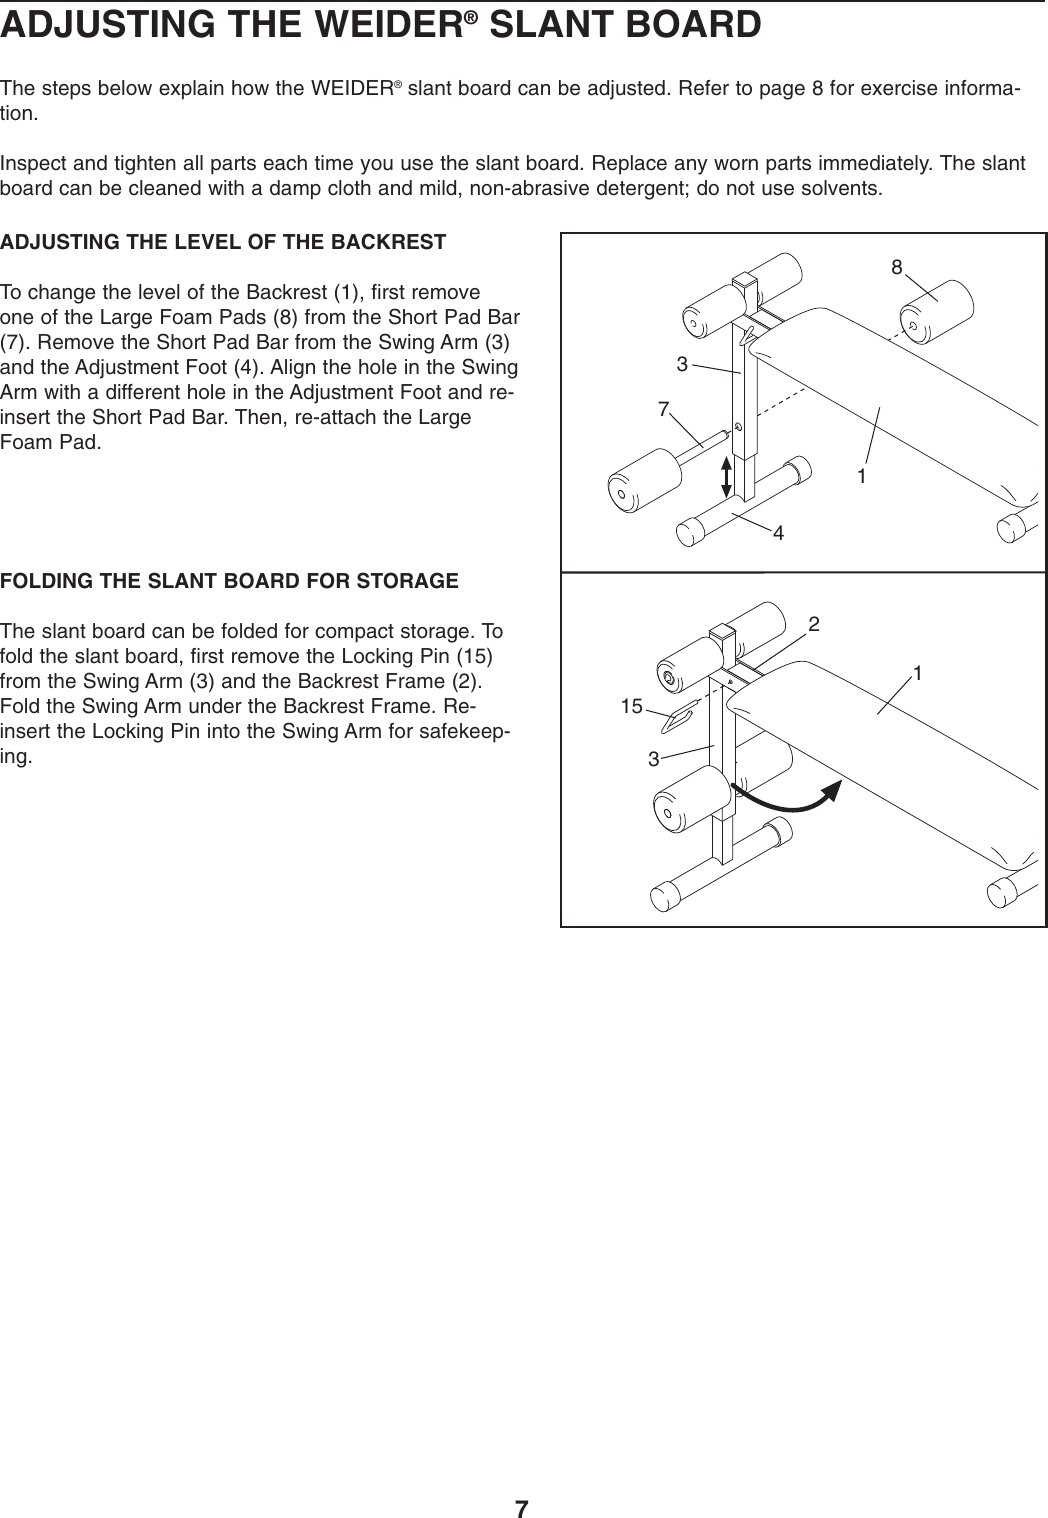 Page 7 of 12 - Weider Weider-Slant-Board-Bench-Weccbe1000-Users-Manual- *WECCBE10000-165877(CEN)  Weider-slant-board-bench-weccbe1000-users-manual